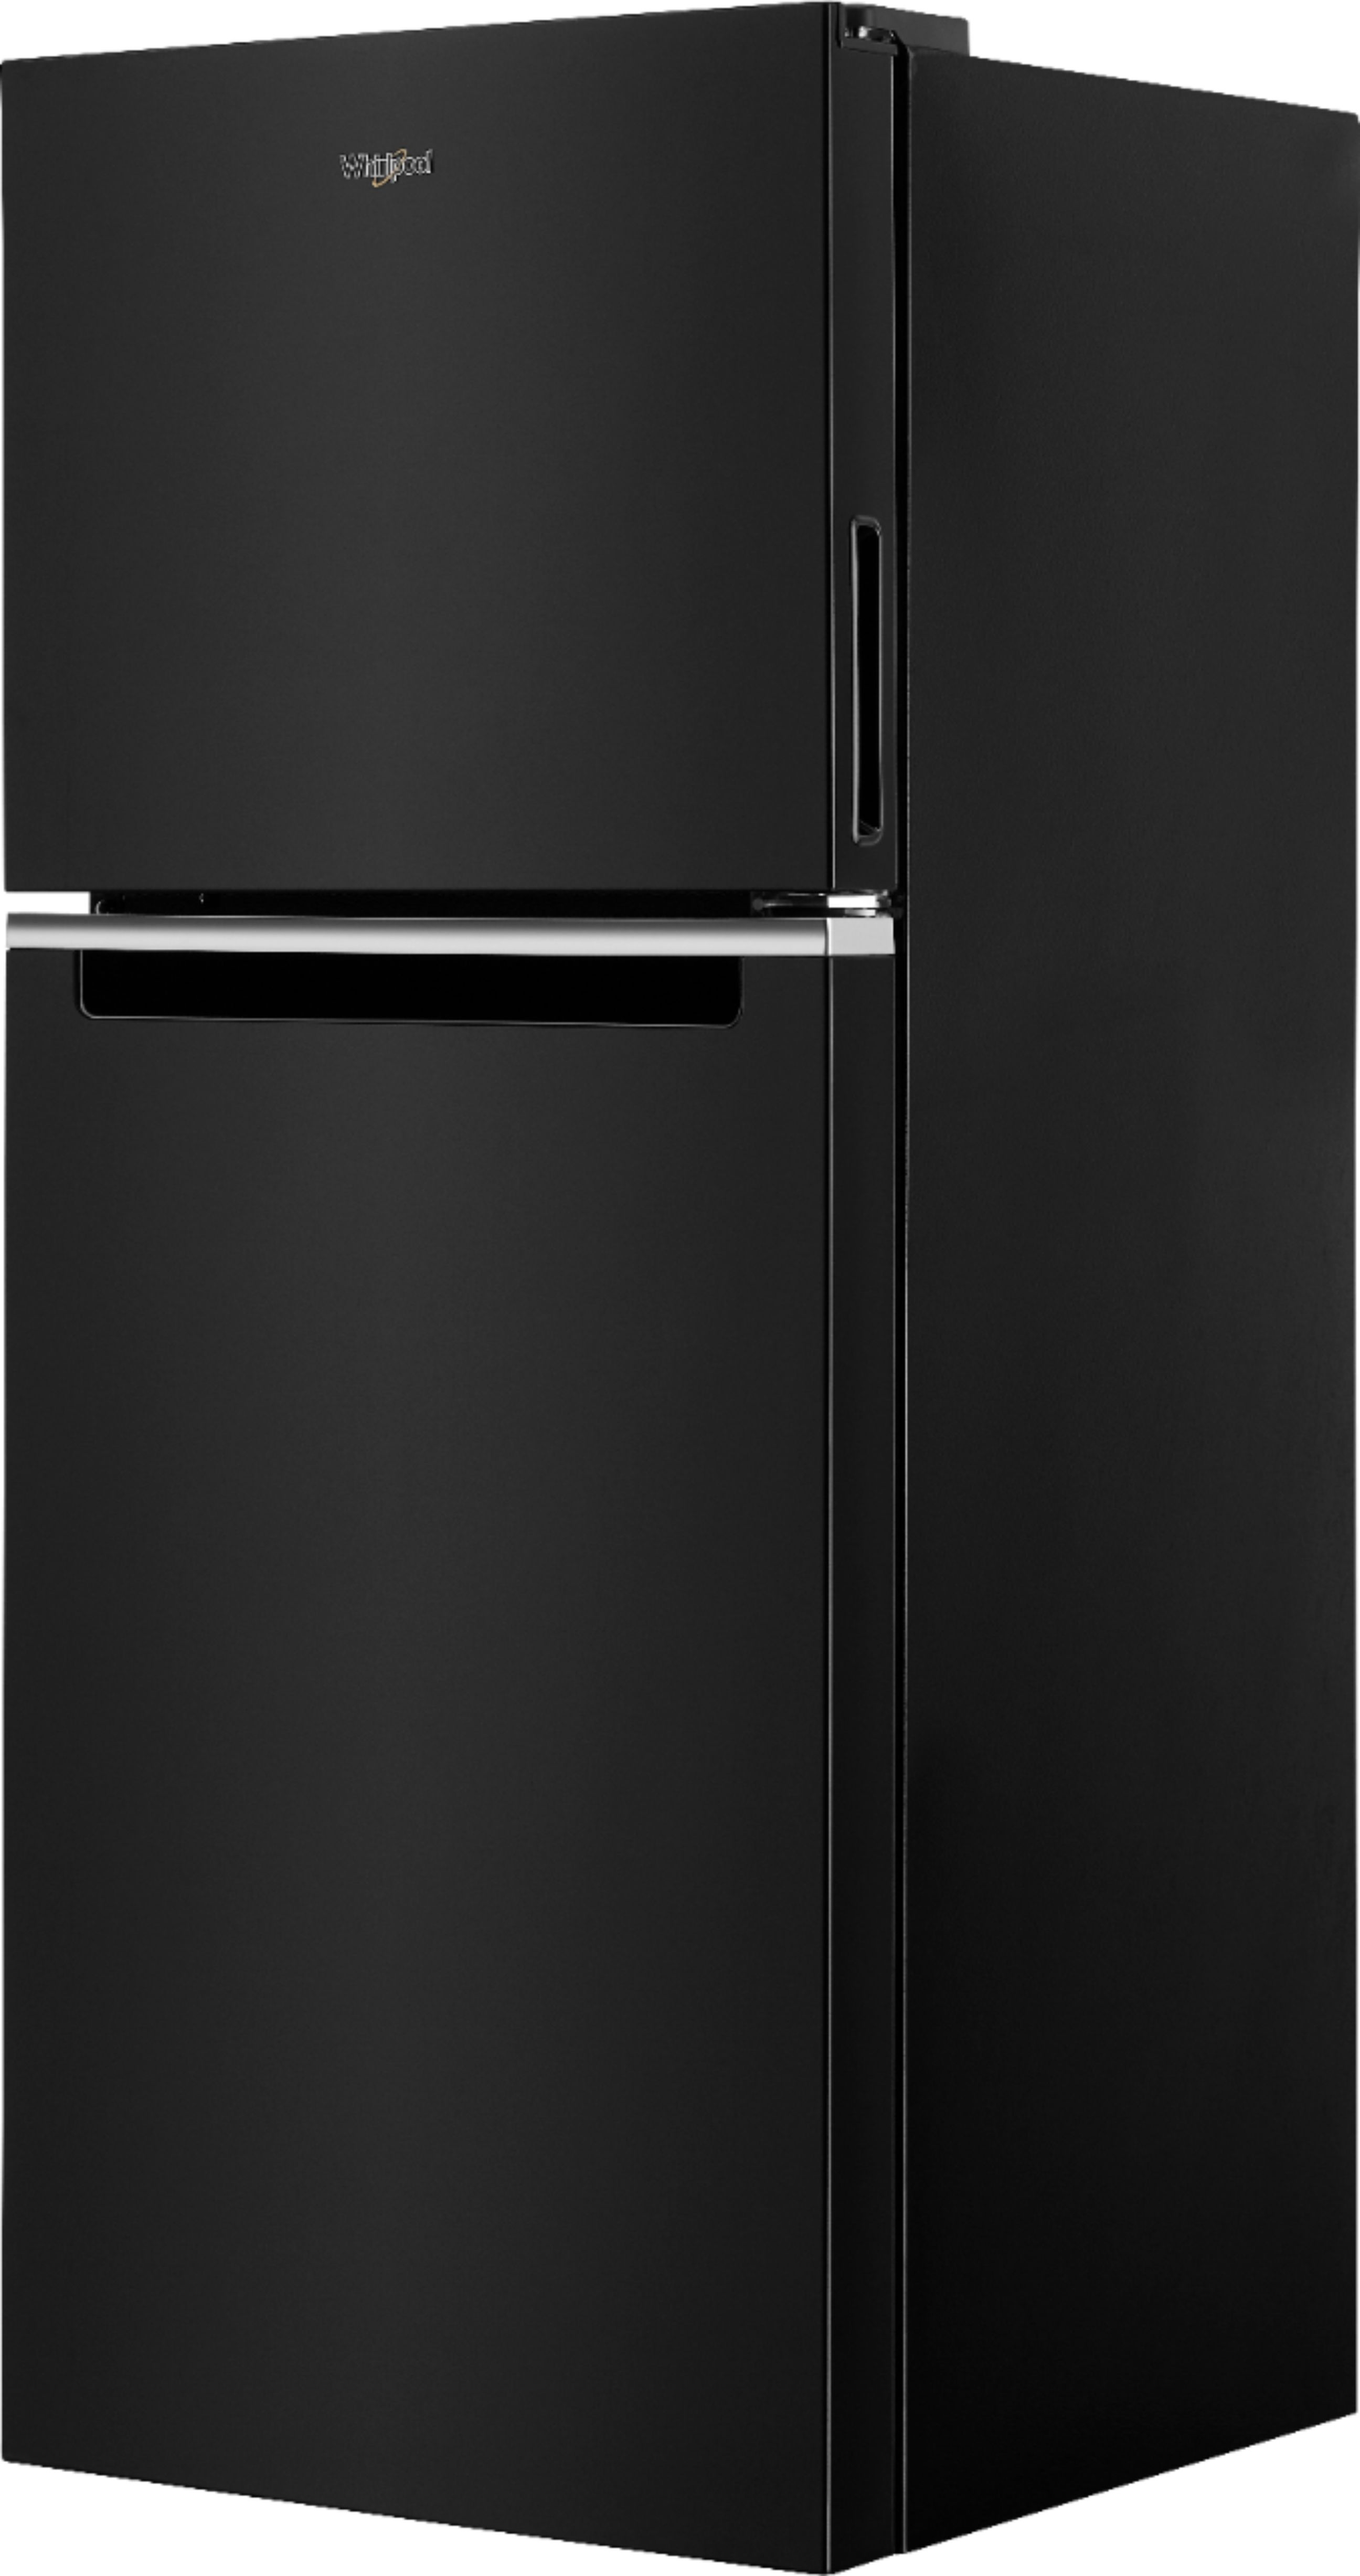 Left View: Whirlpool - 17.7 Cu. Ft. Top-Freezer Refrigerator - Black